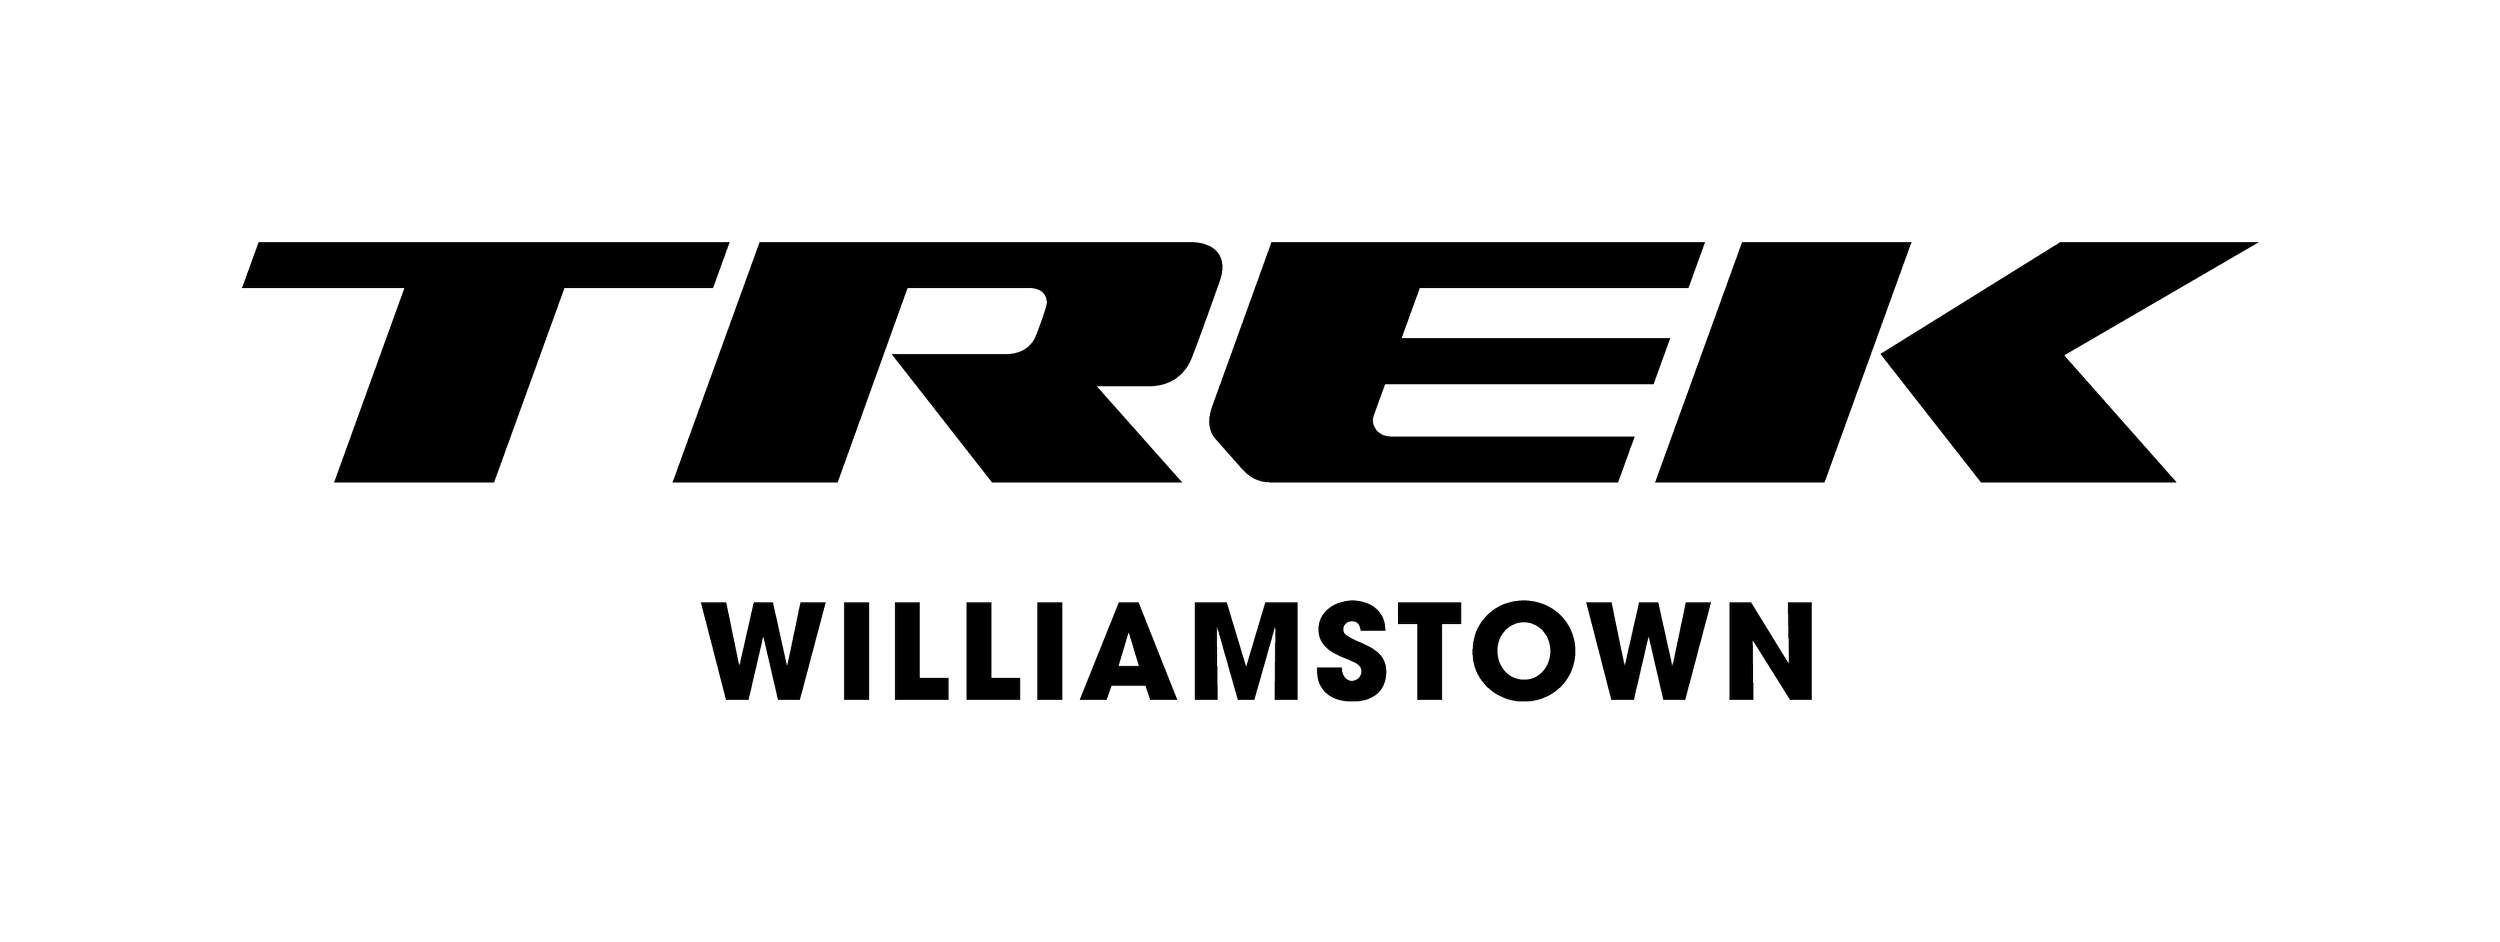 2018_Trek_logo_location_Williamstown_black.png